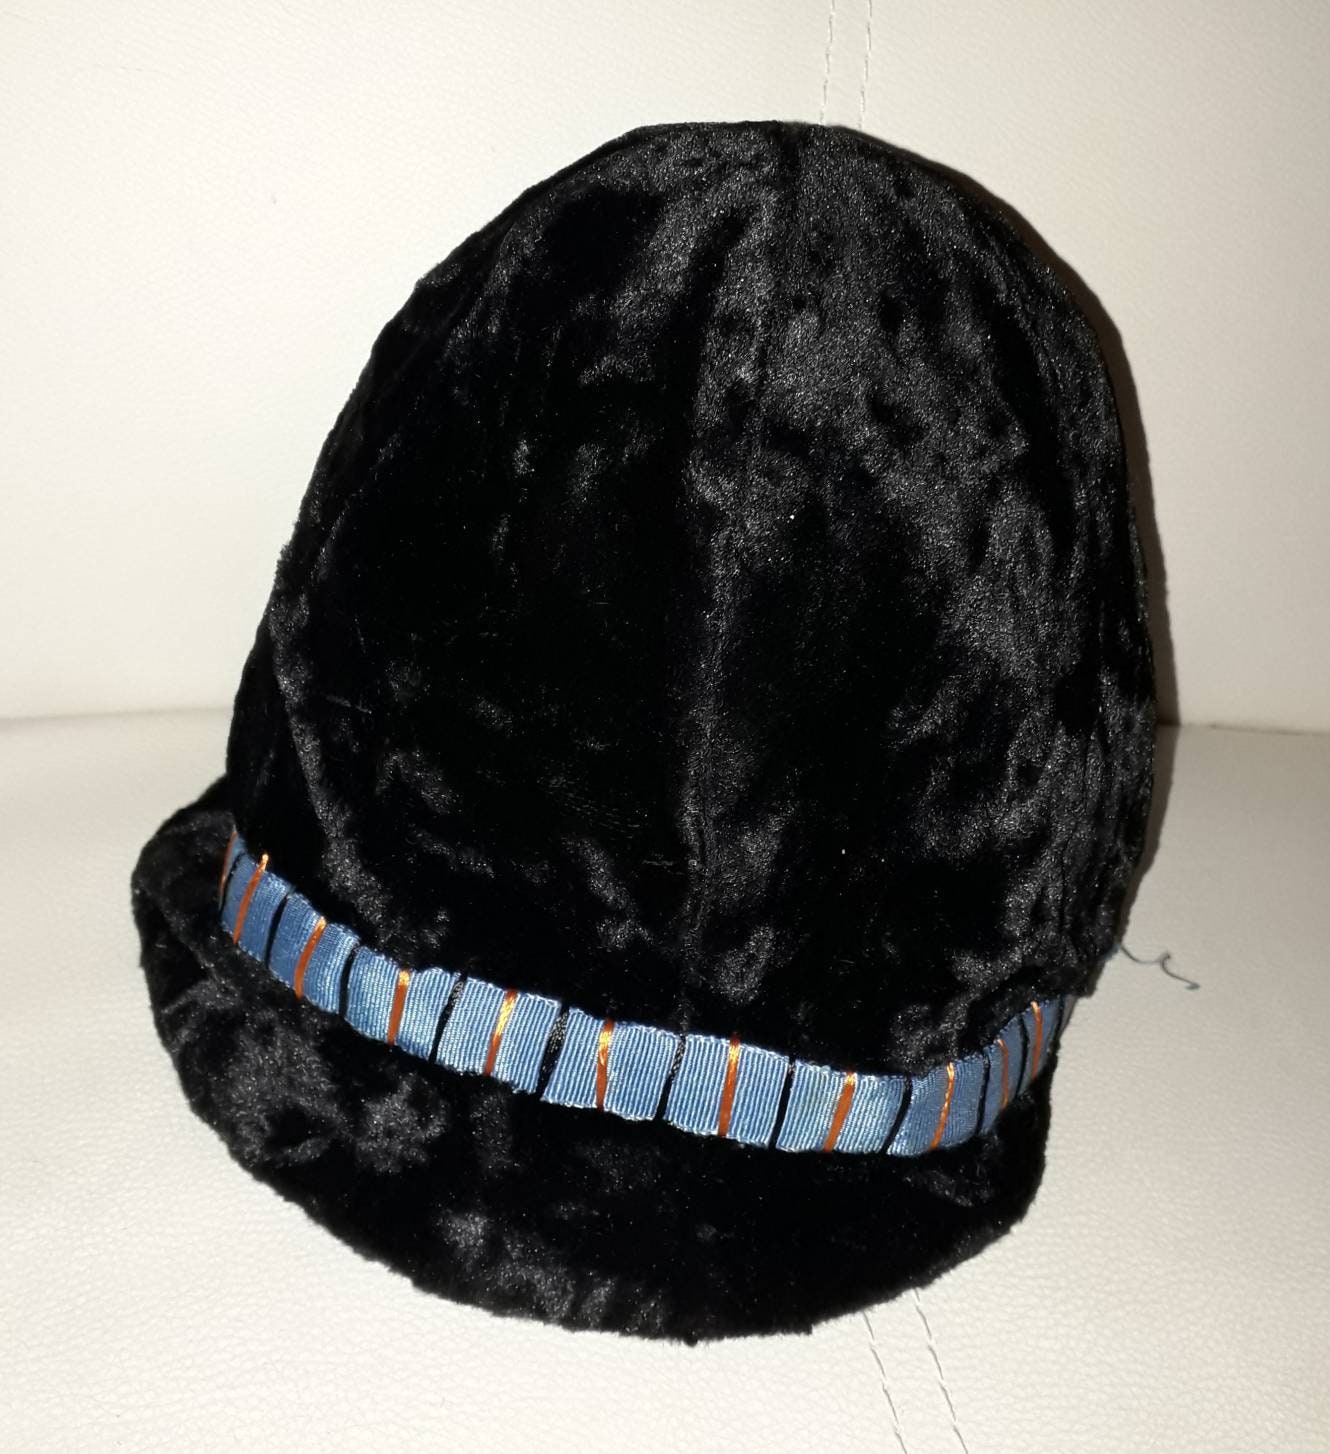 Unworn Vintage Childs Hat 1930s 40s 50s Black Velvet Bucket Hat Cap Colored Ribbon Accent NWT German Art Deco 20 in.